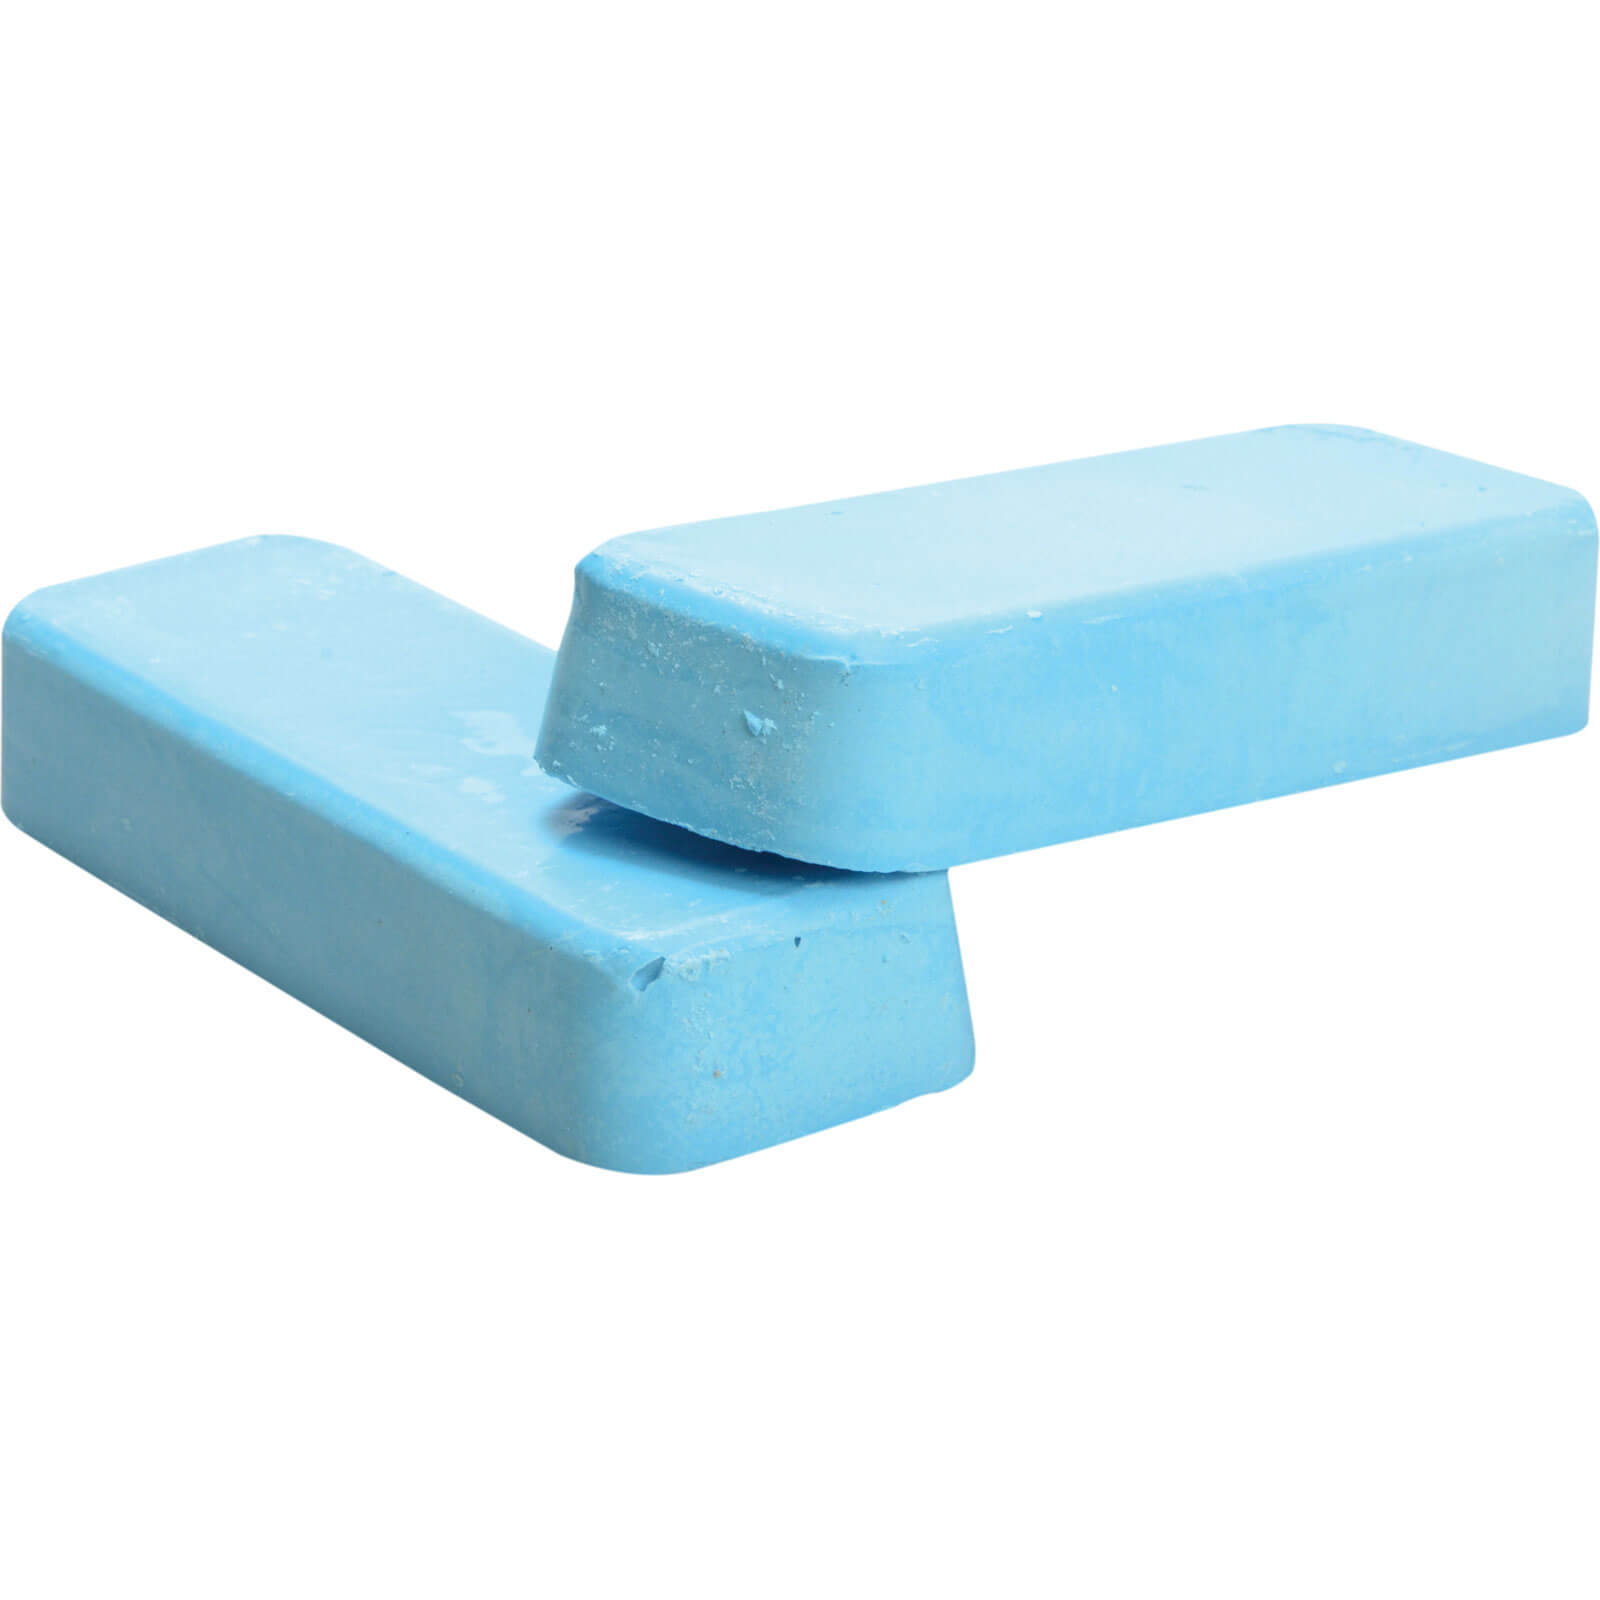 Image of Zenith Profin Blumax Polishing Bars Blue Pack of 2